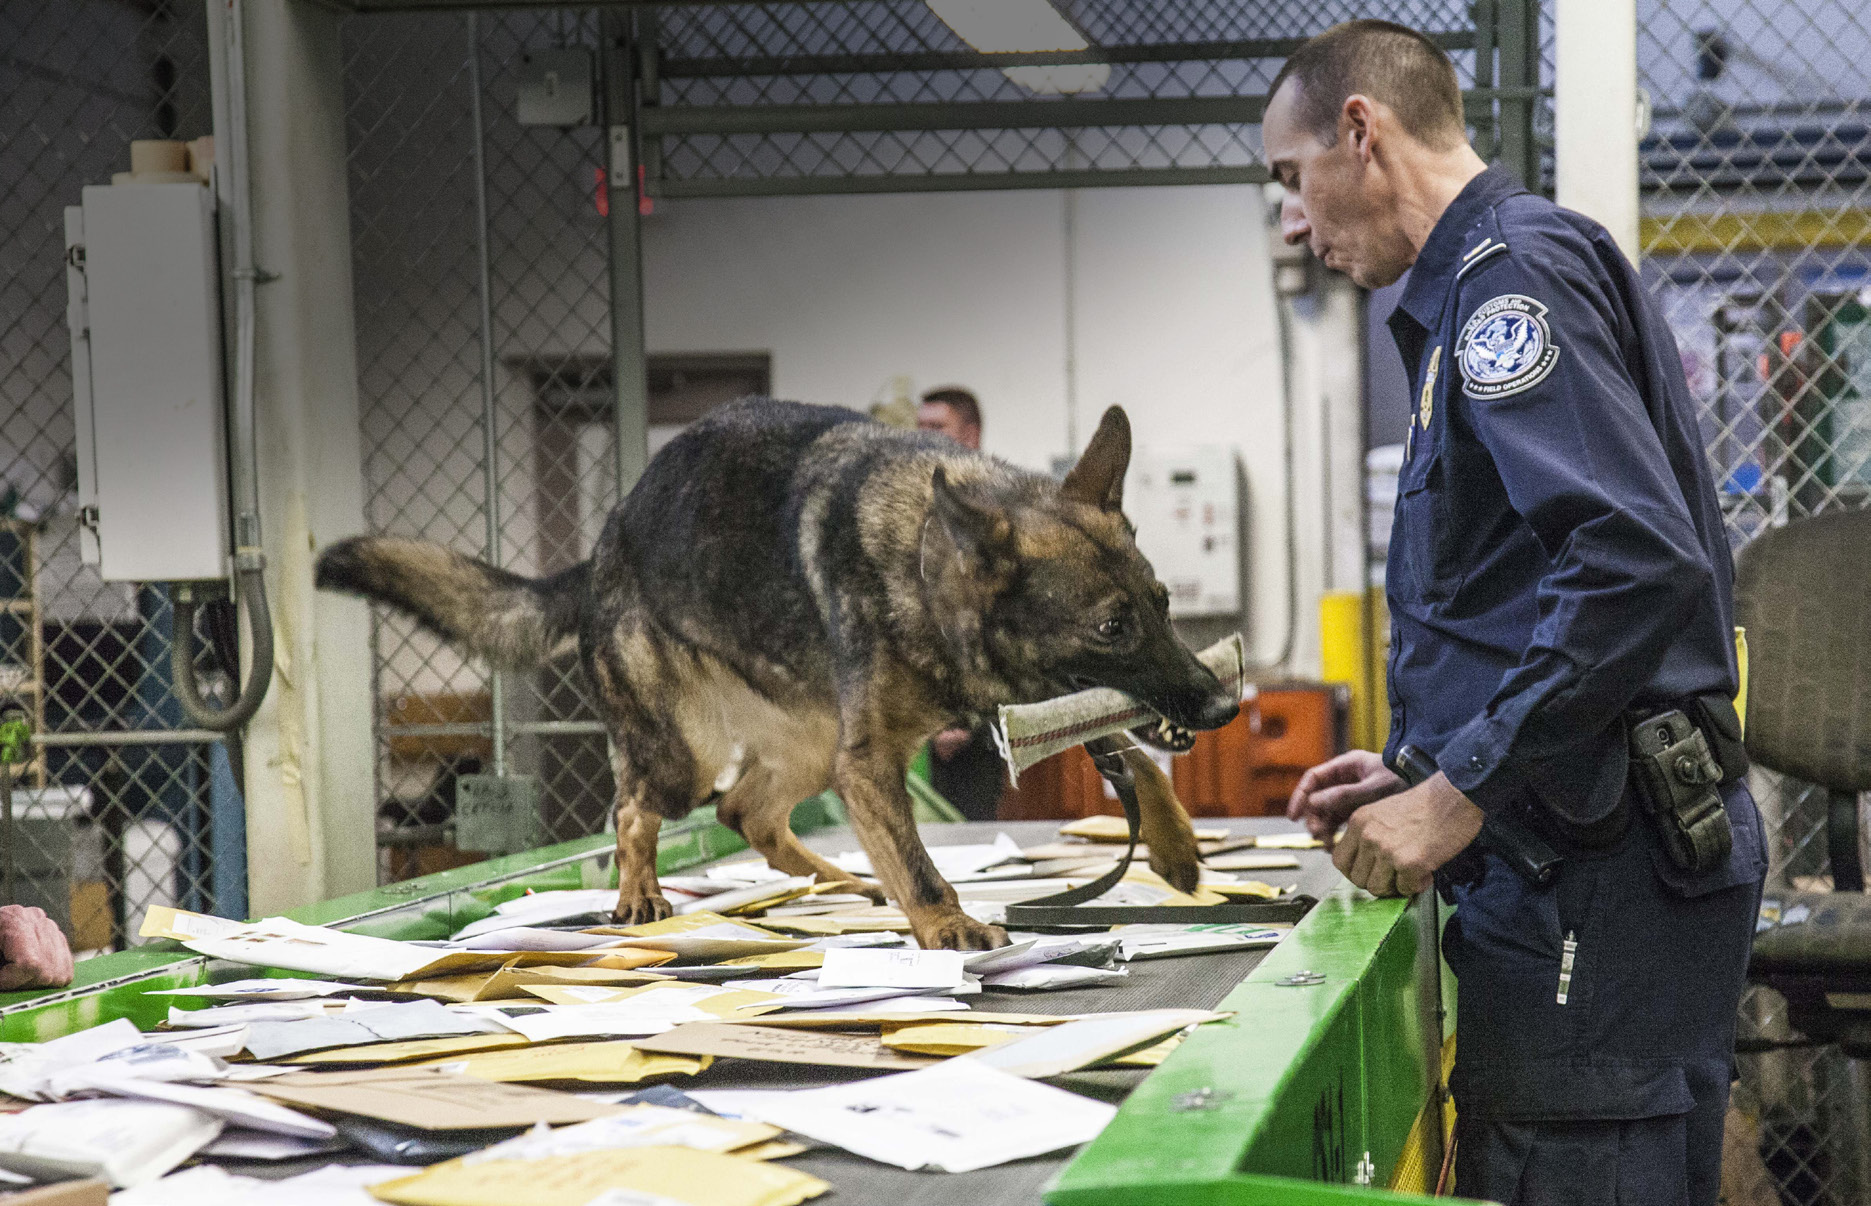 CBP Officer rewards his dog after locating narcotics.